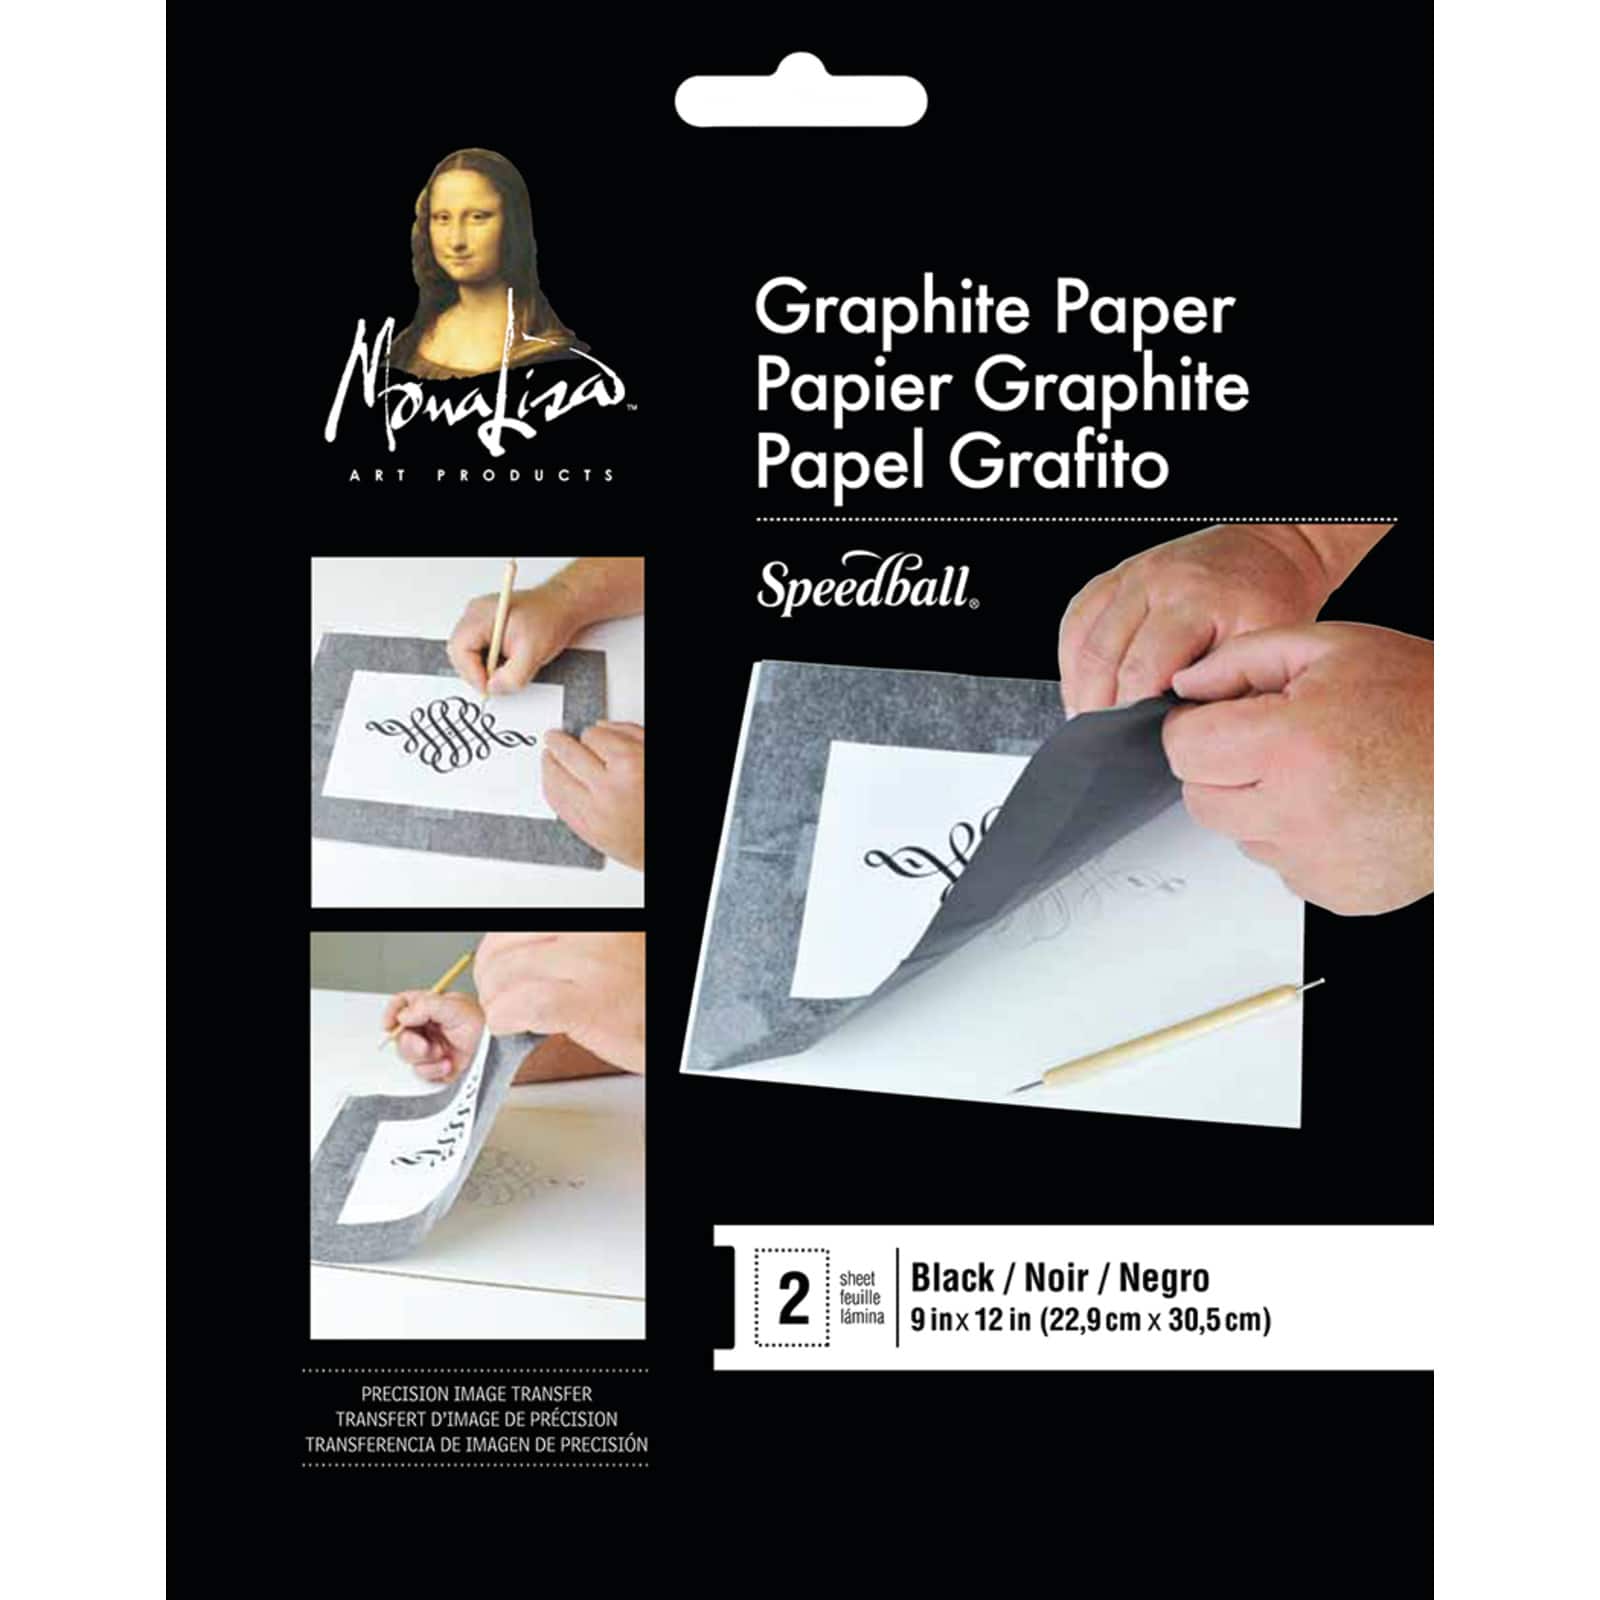 Graphite Paper by Craft Smart™